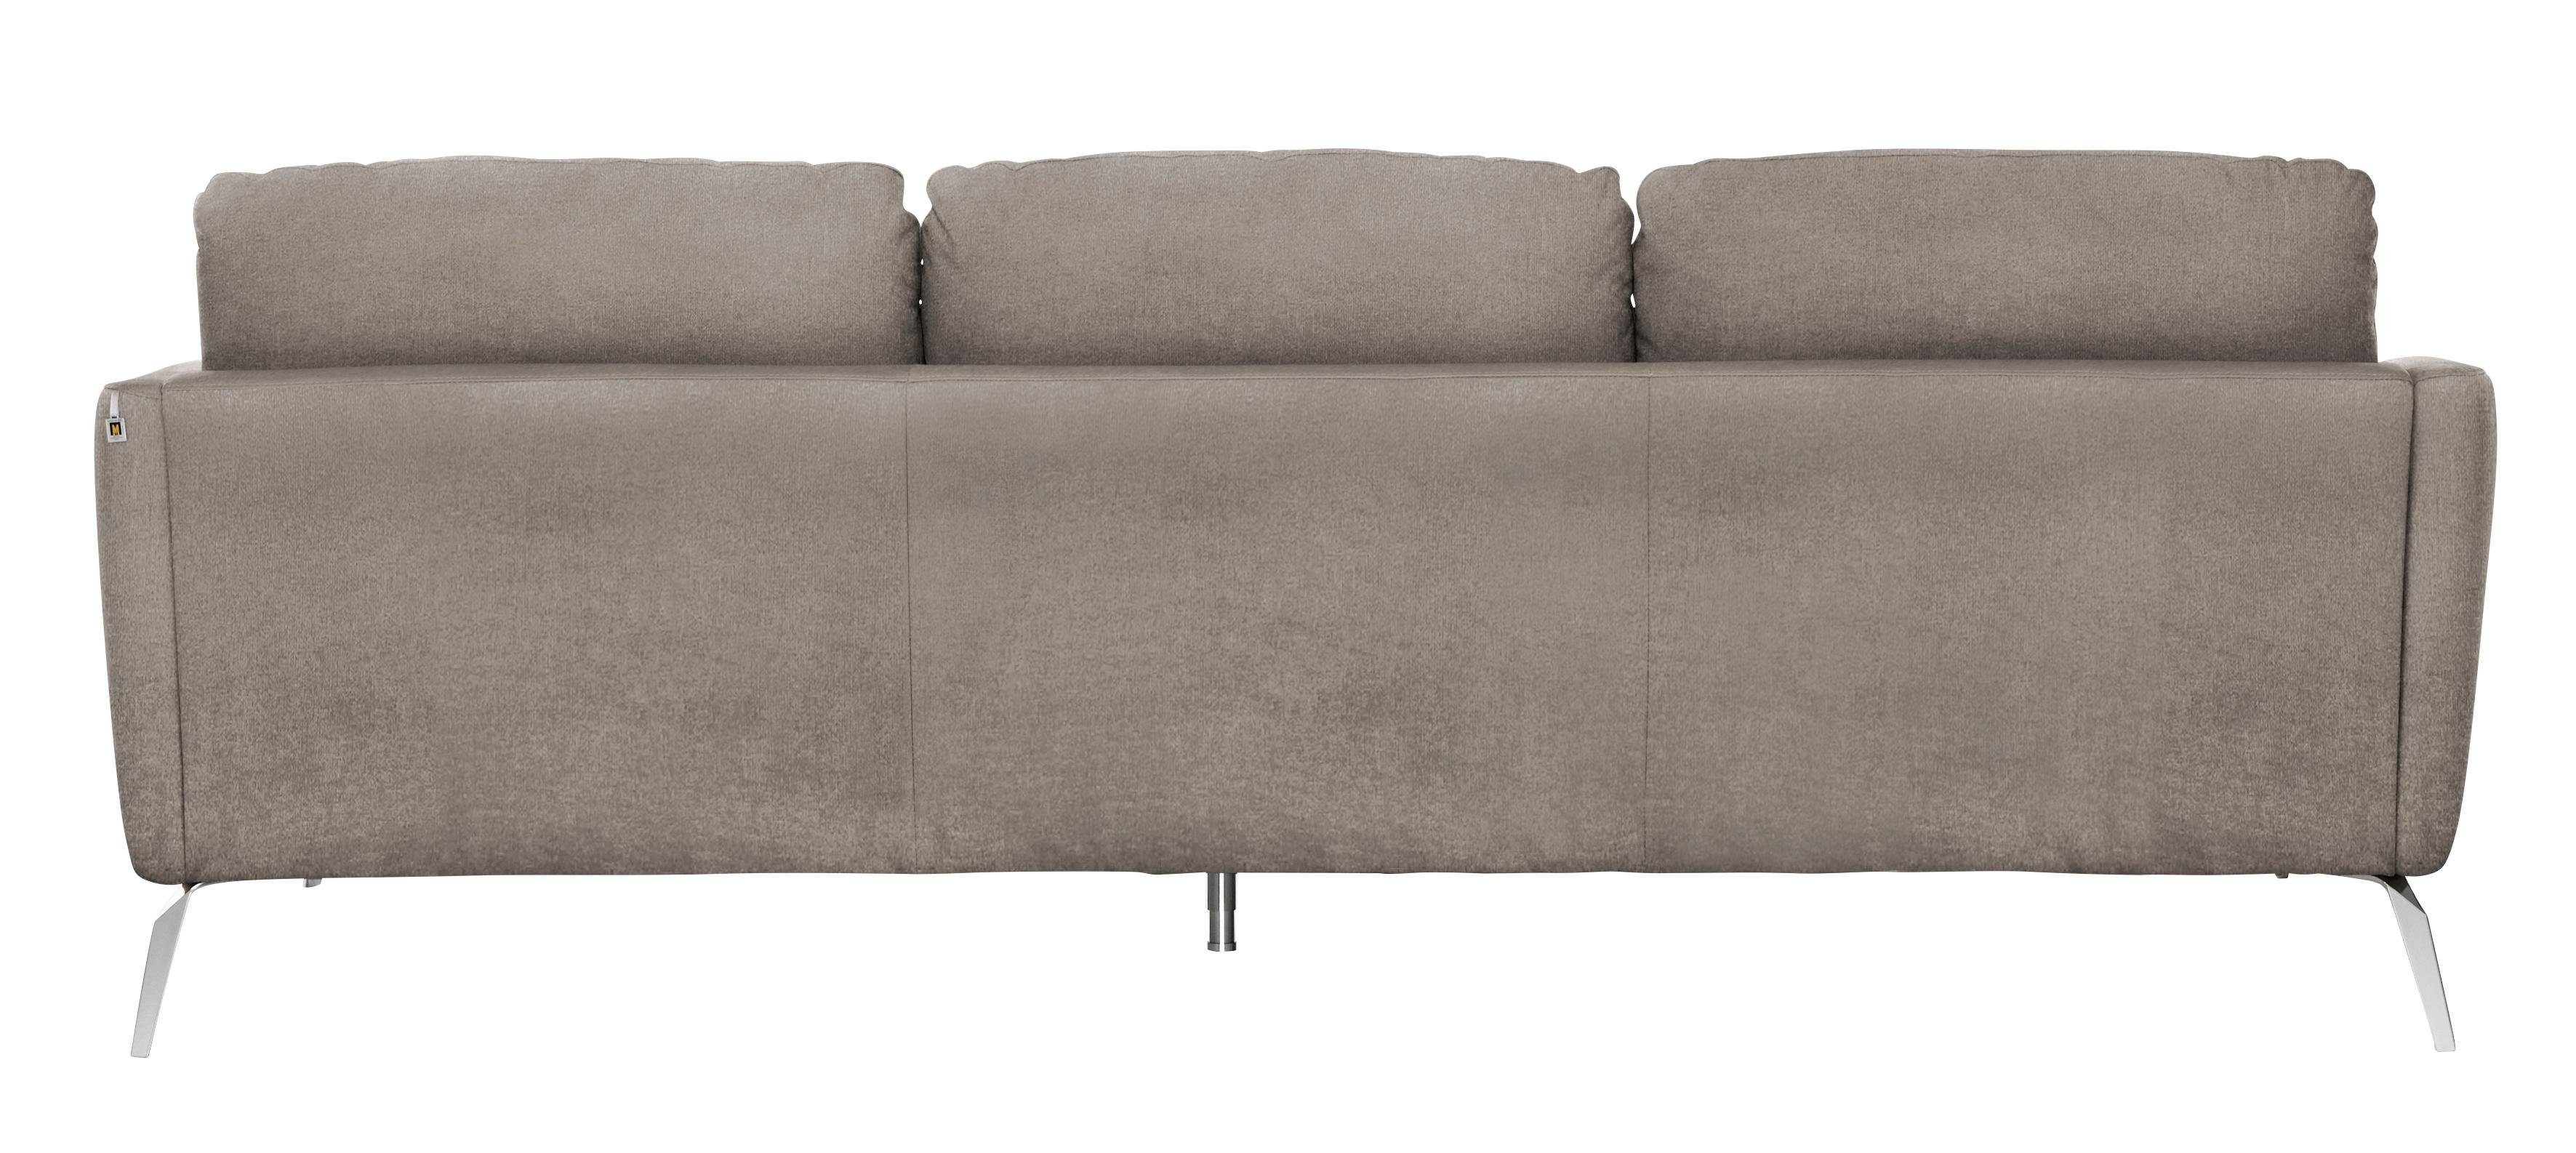 W.SCHILLIG Chrom glänzend dekorativer Heftung Big-Sofa softy, Füße mit im Sitz,